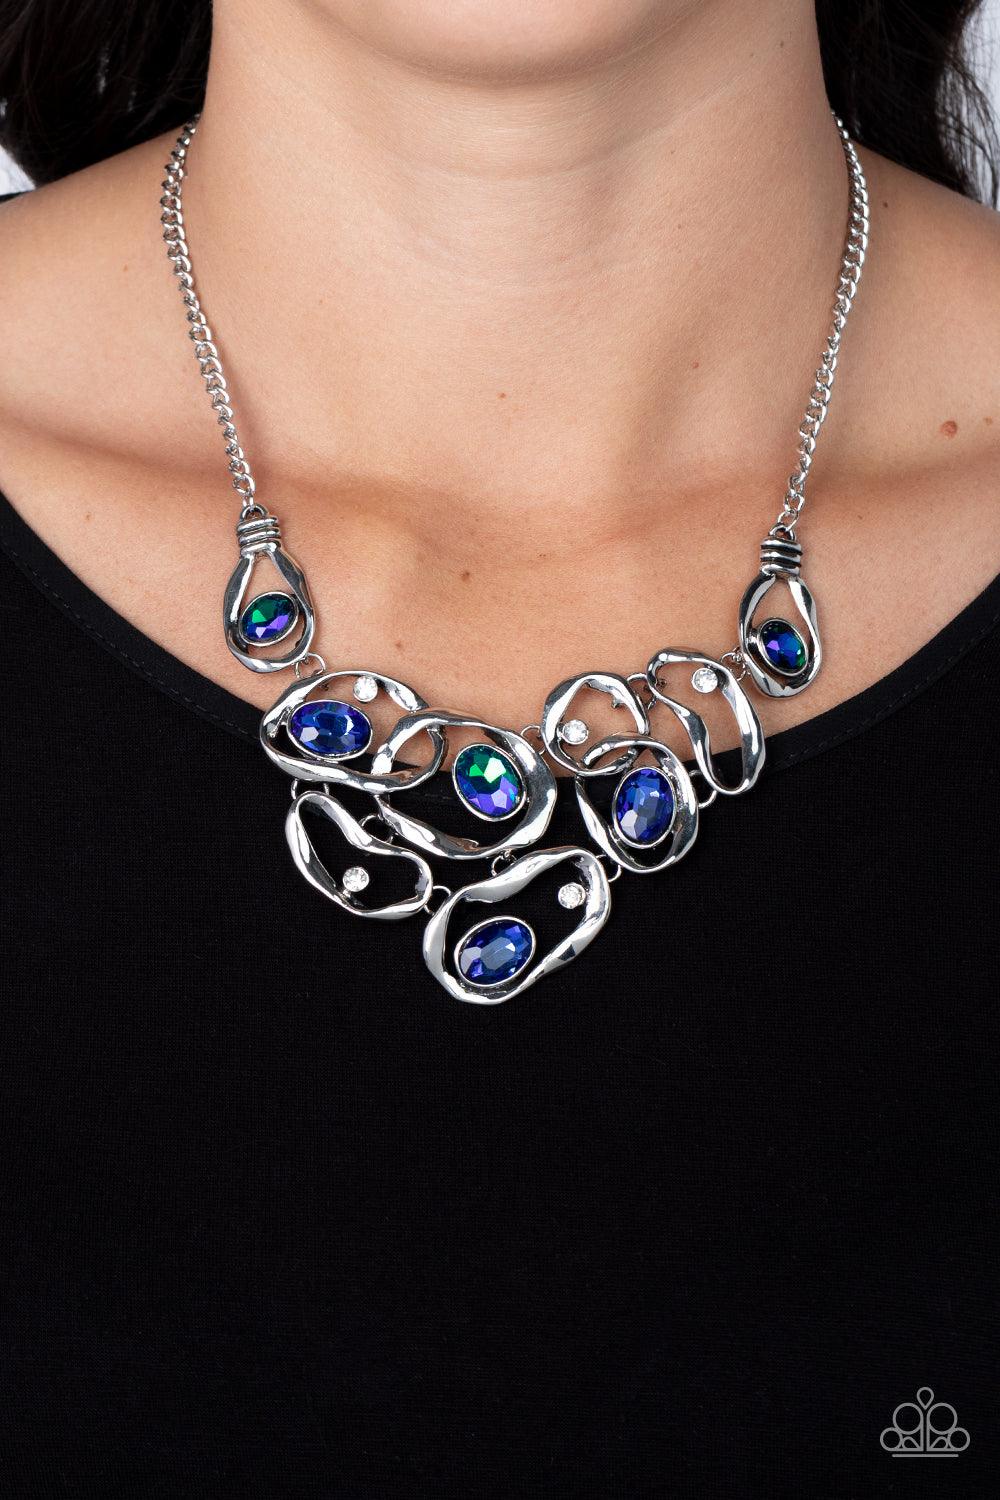 Warp Speed Blue Necklace - Jewelry by Bretta